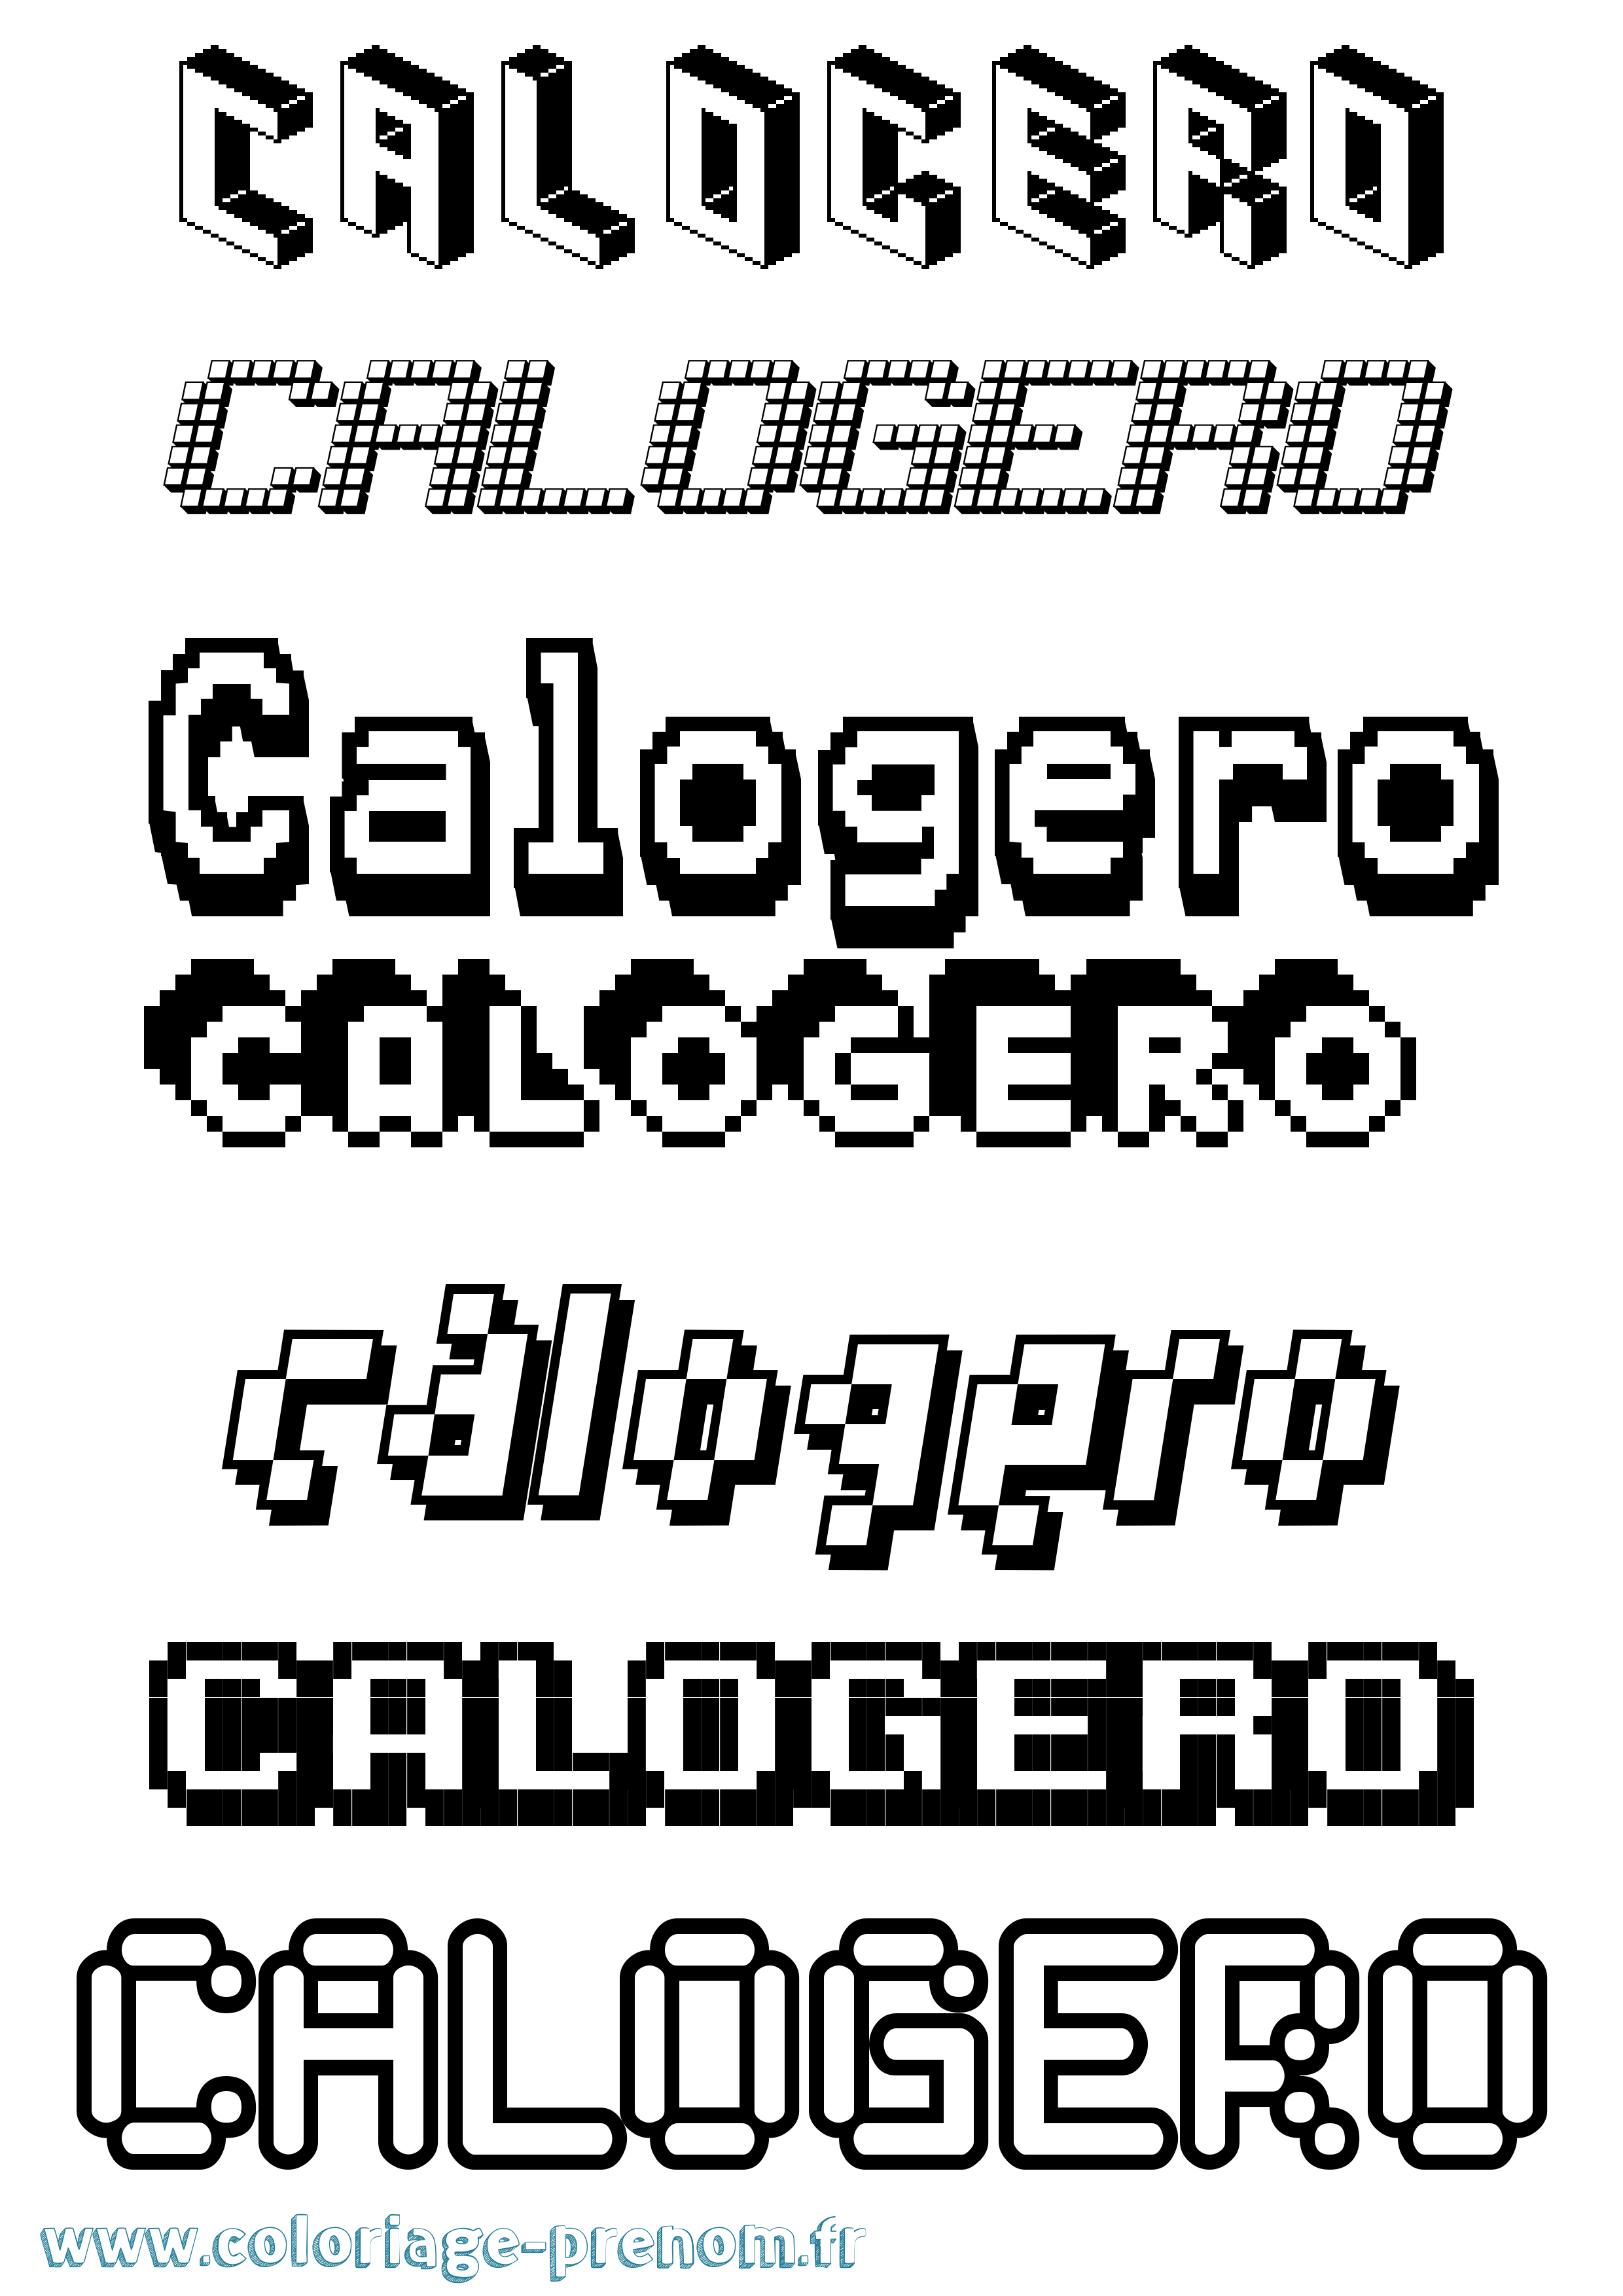 Coloriage prénom Calogero Pixel